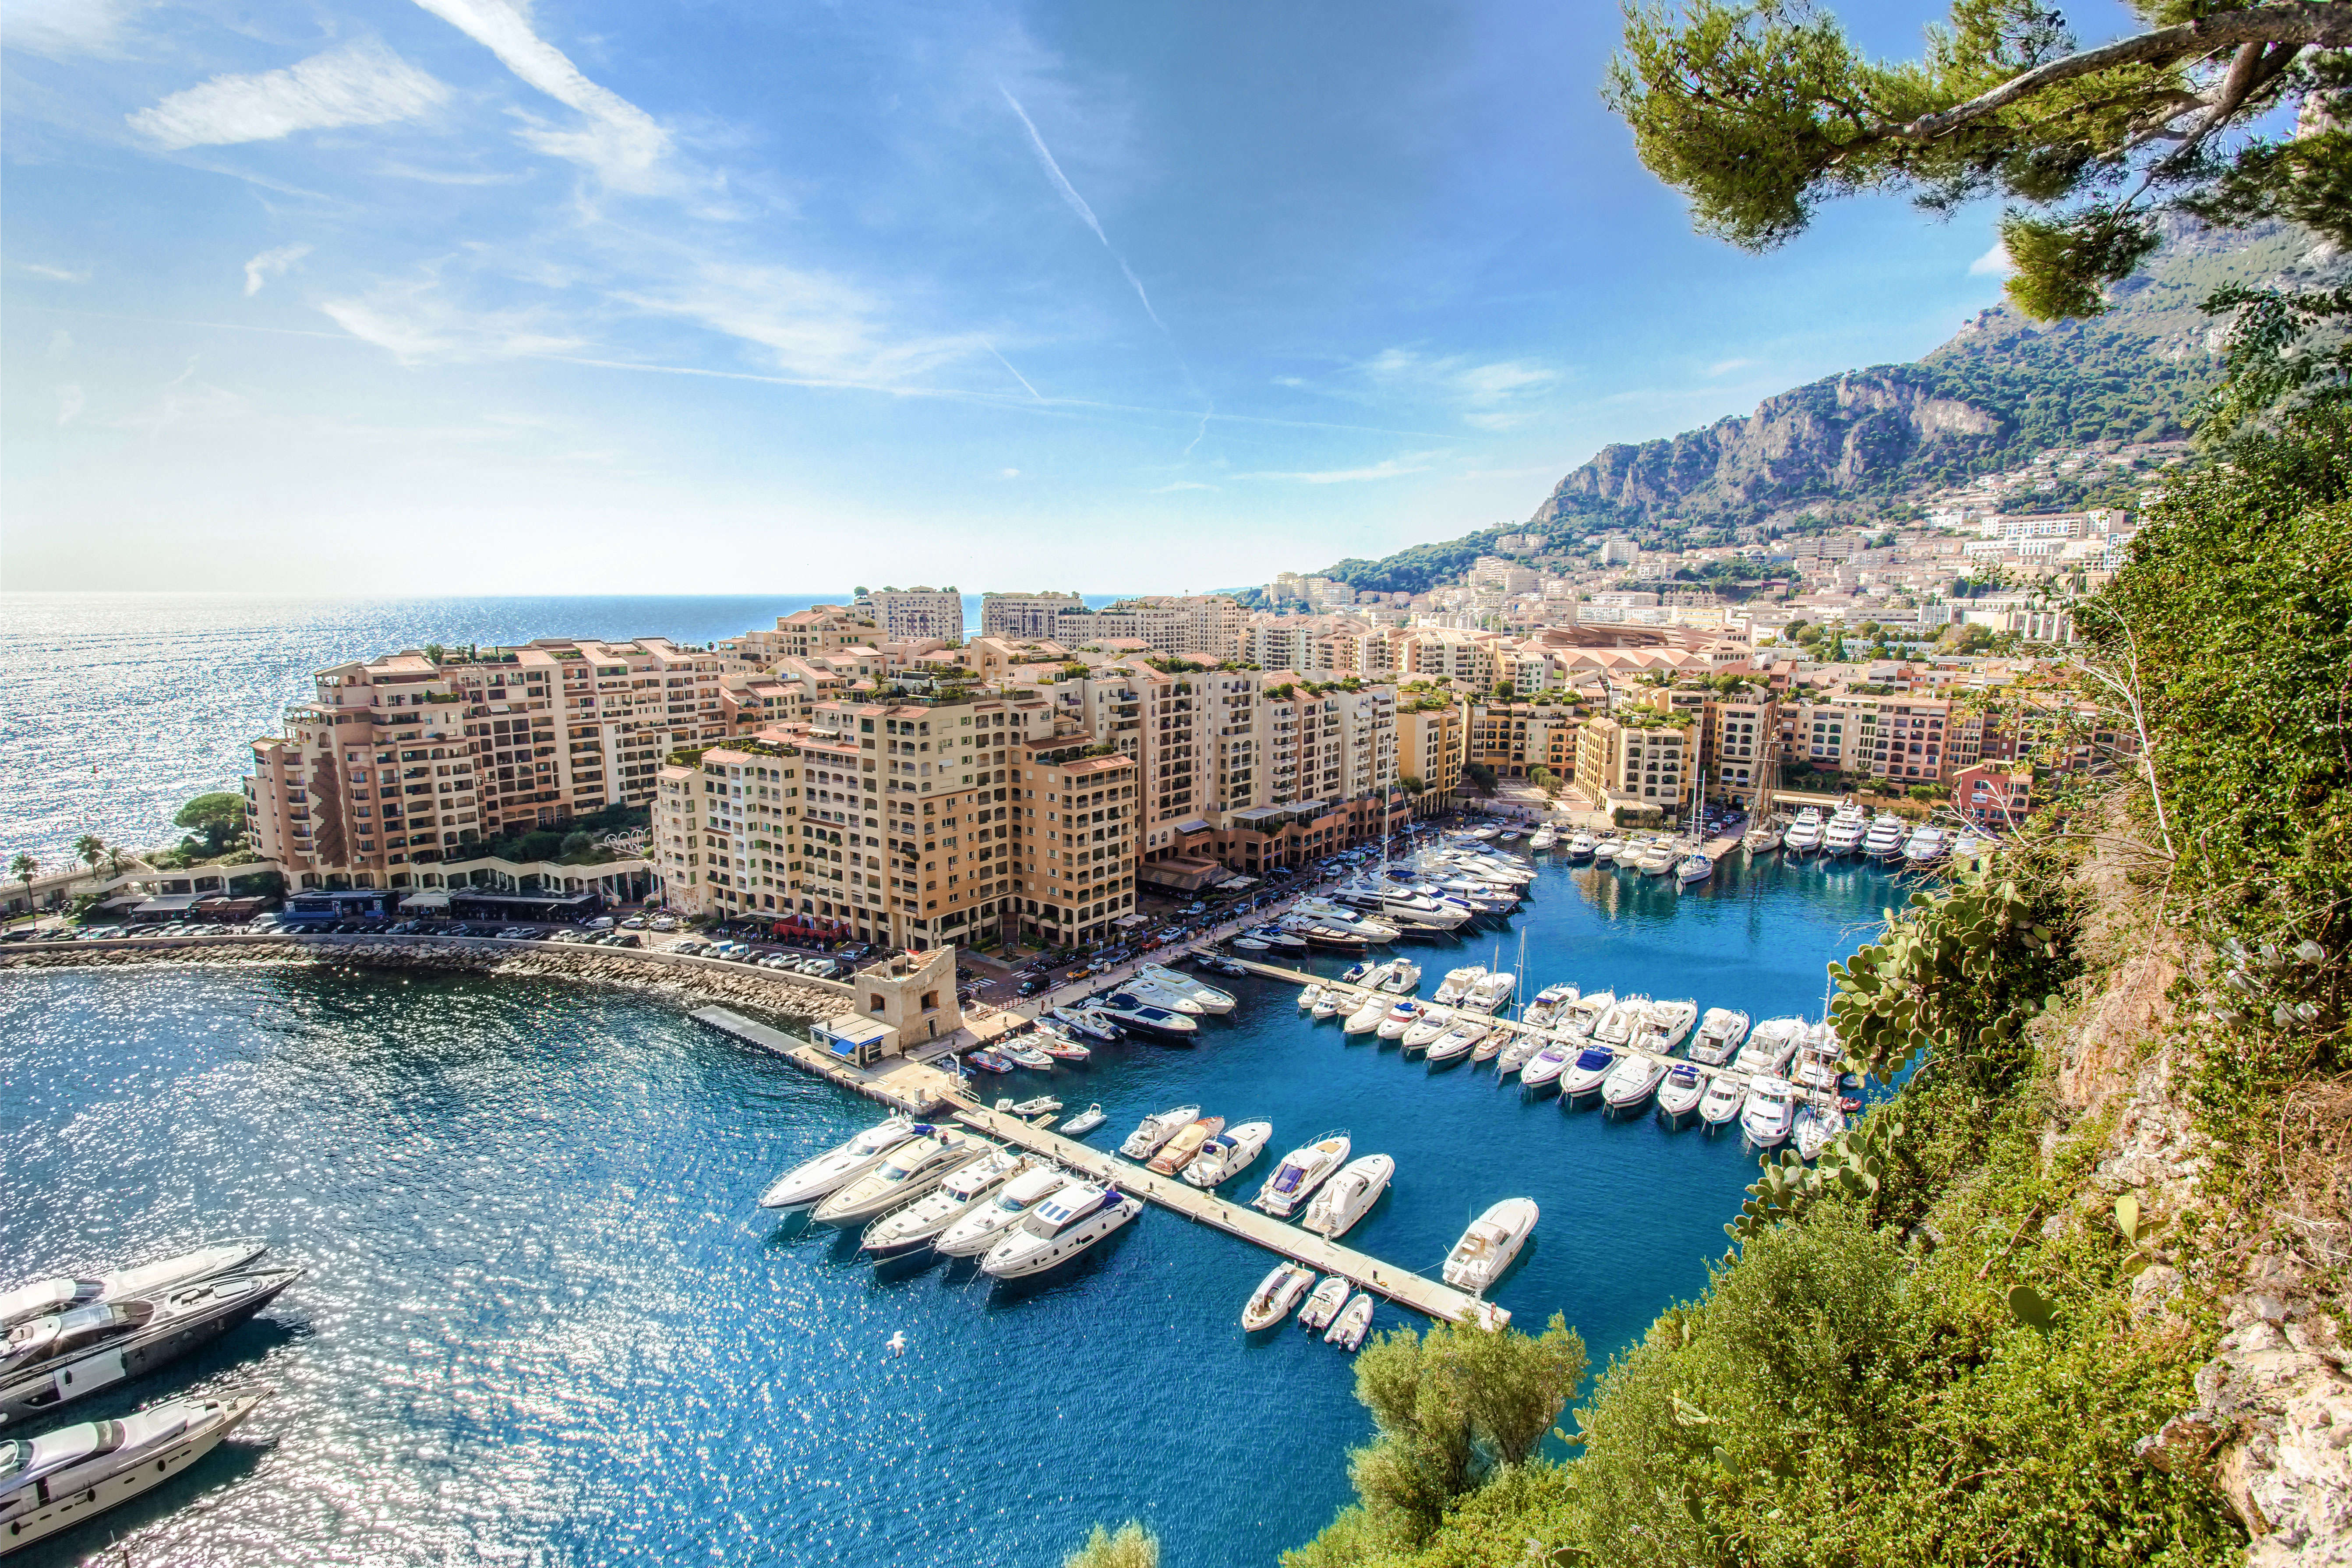 Monaco always celebrates in style